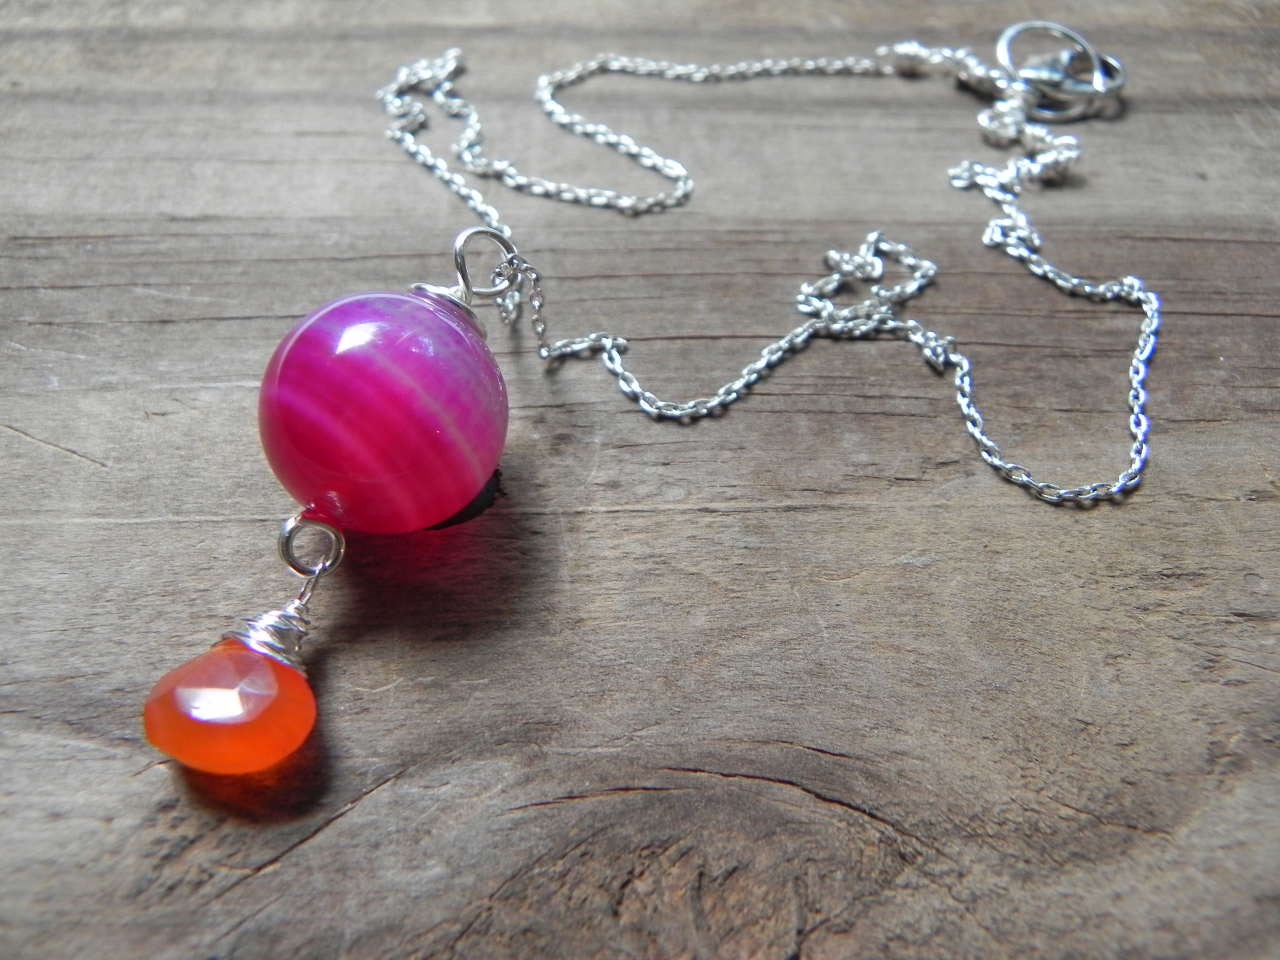 carnelian pendant necklace, pink agate beaded necklace, color blocked pendant necklace, juicy colorful necklace - AdrianaSoto